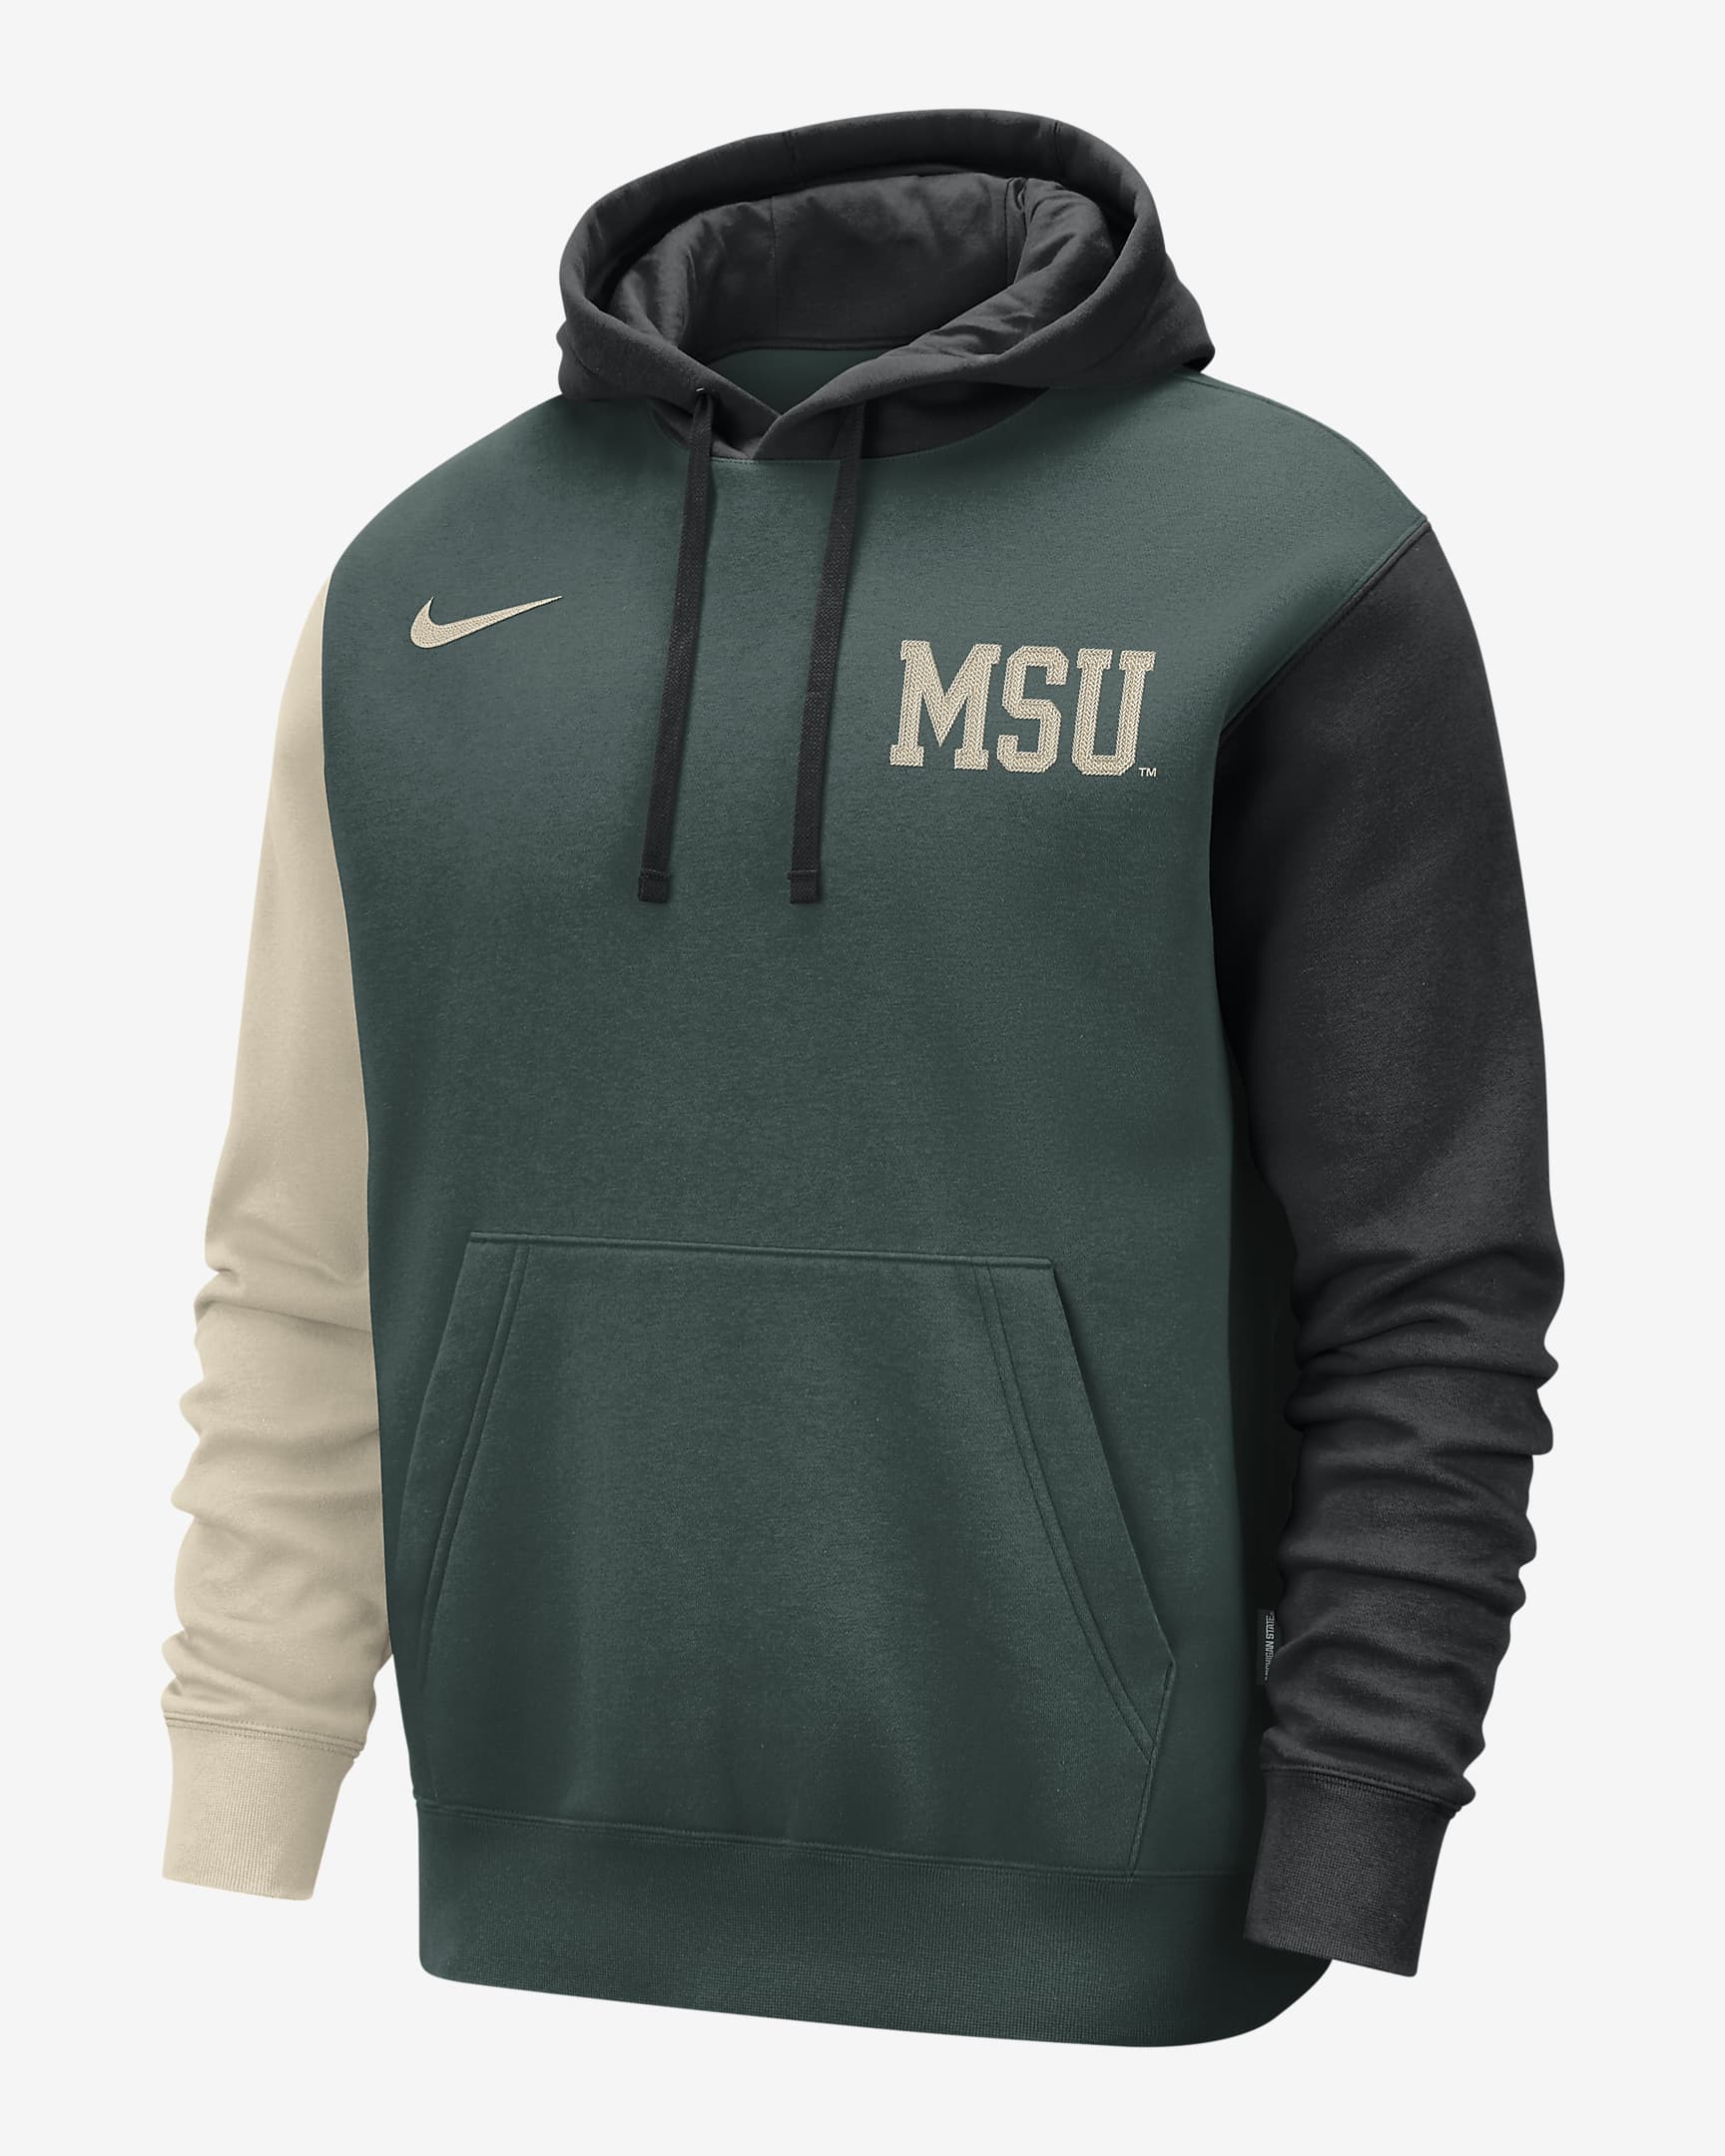 tOfficial MSU Nike merchandise thread - Page 2 Michigan-state-club-fleece-mens-pullover-hoodie-n2WXqT